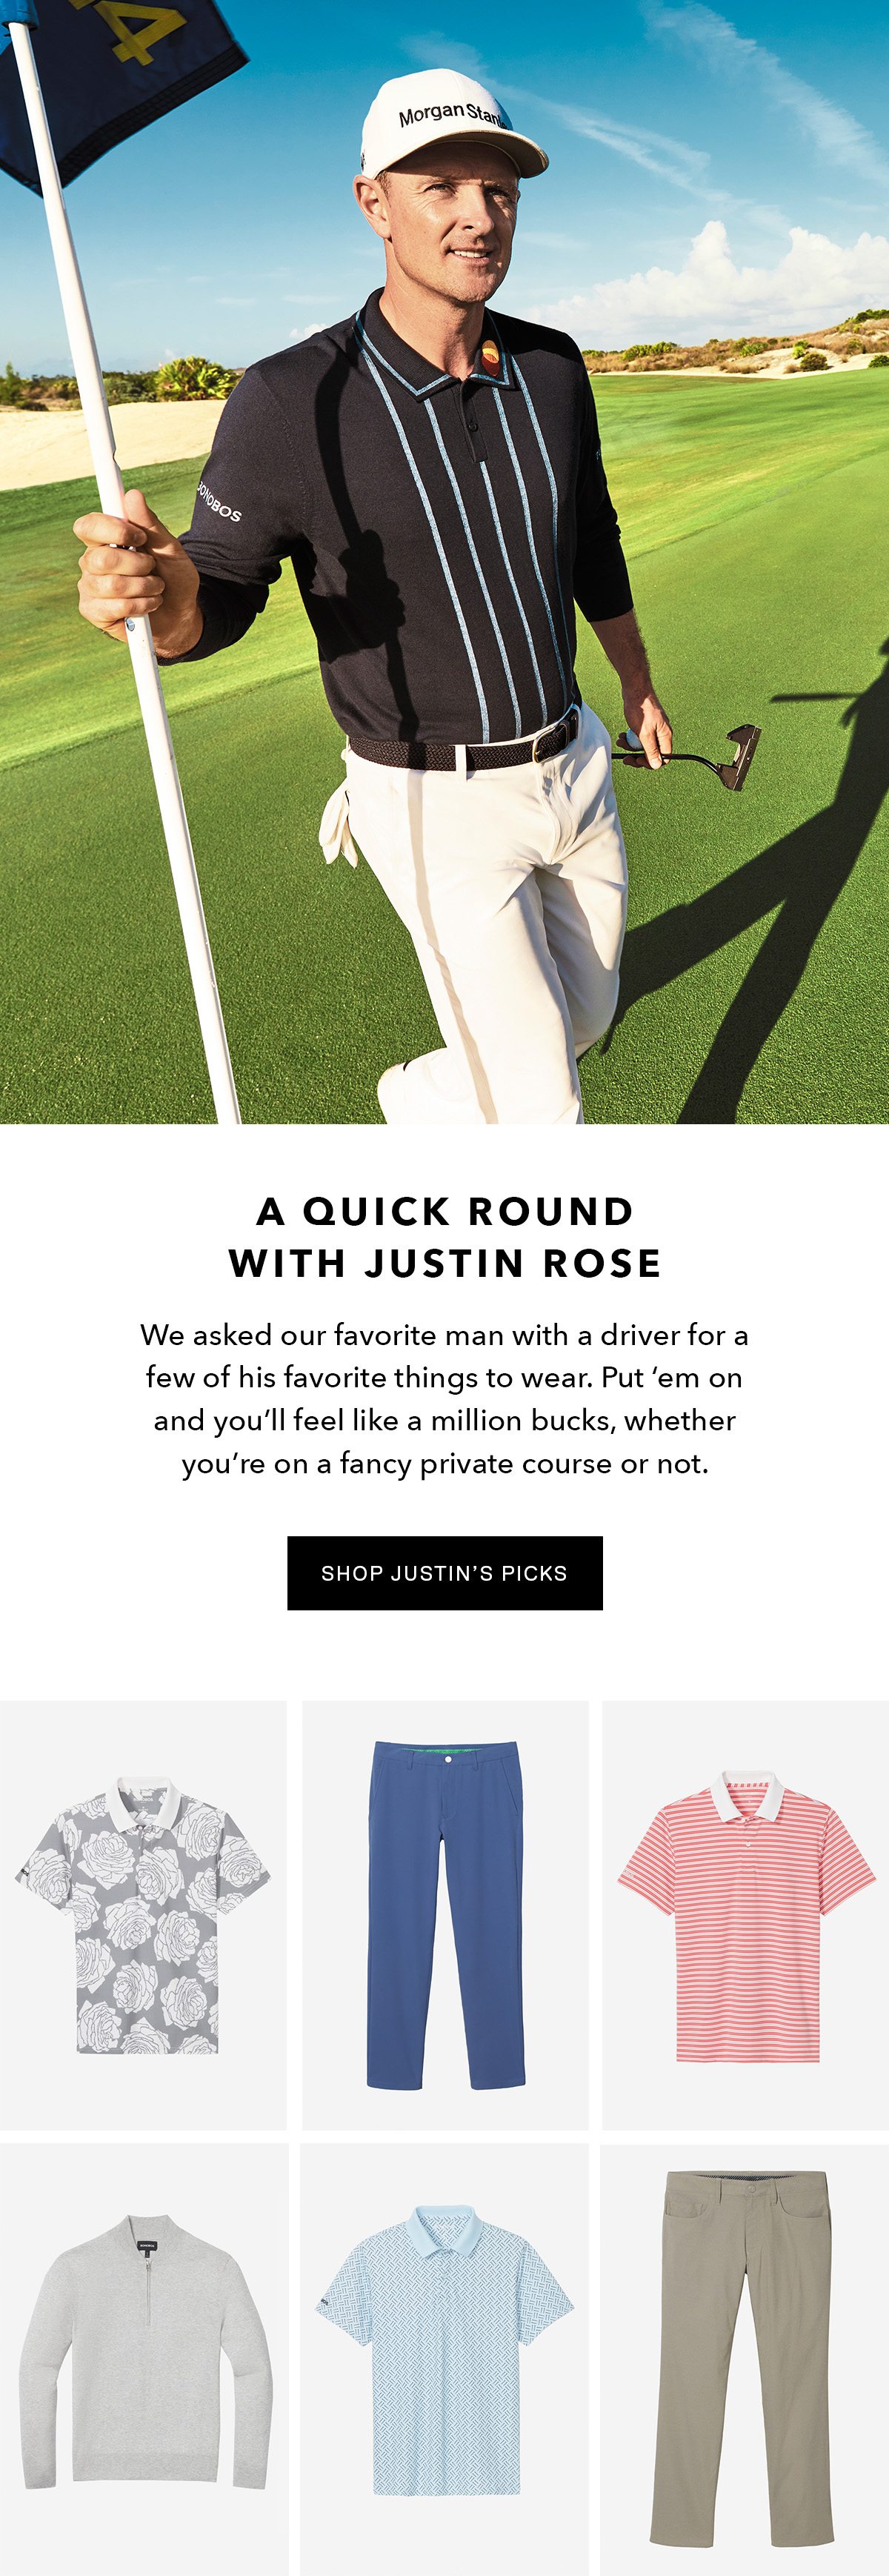 Justin's Picks Golf